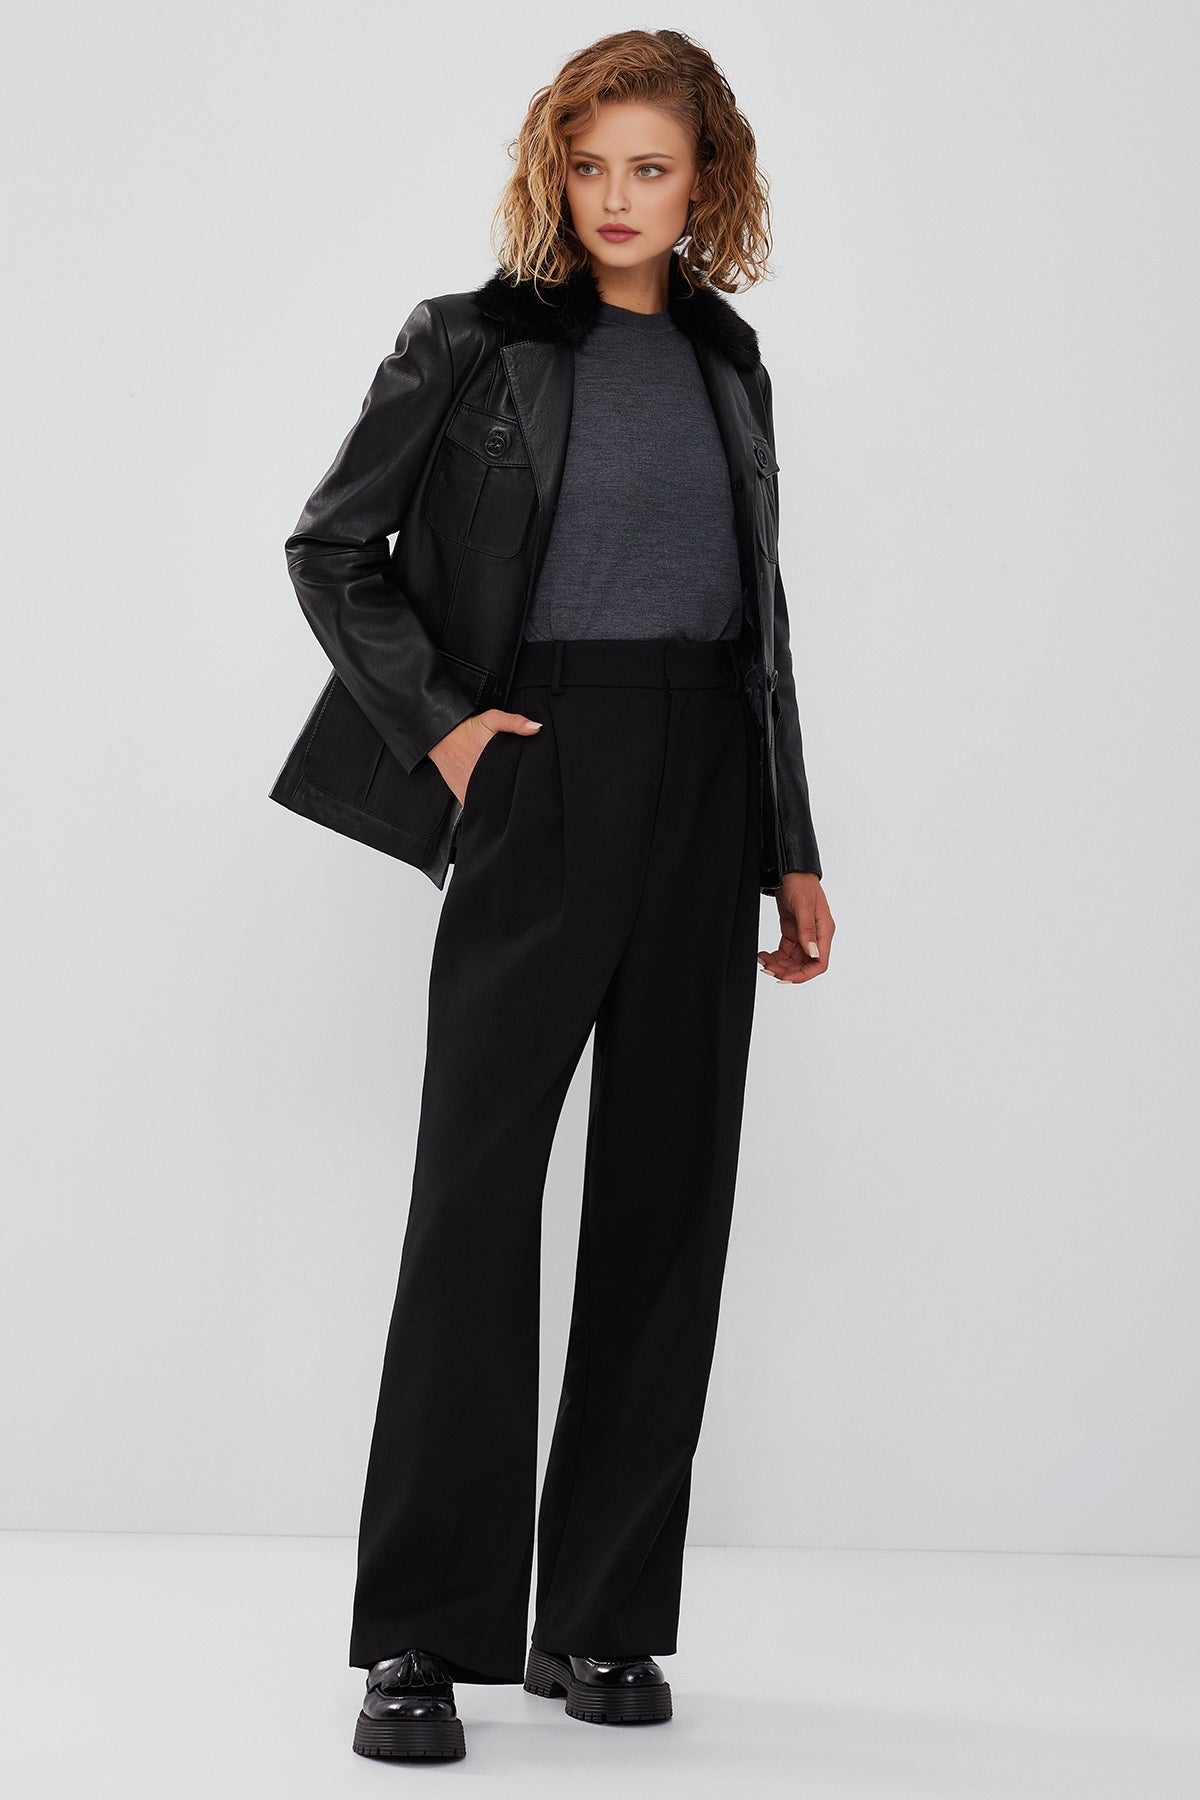 Anais Women's Black Fur Collar Blazer Leather Jacket